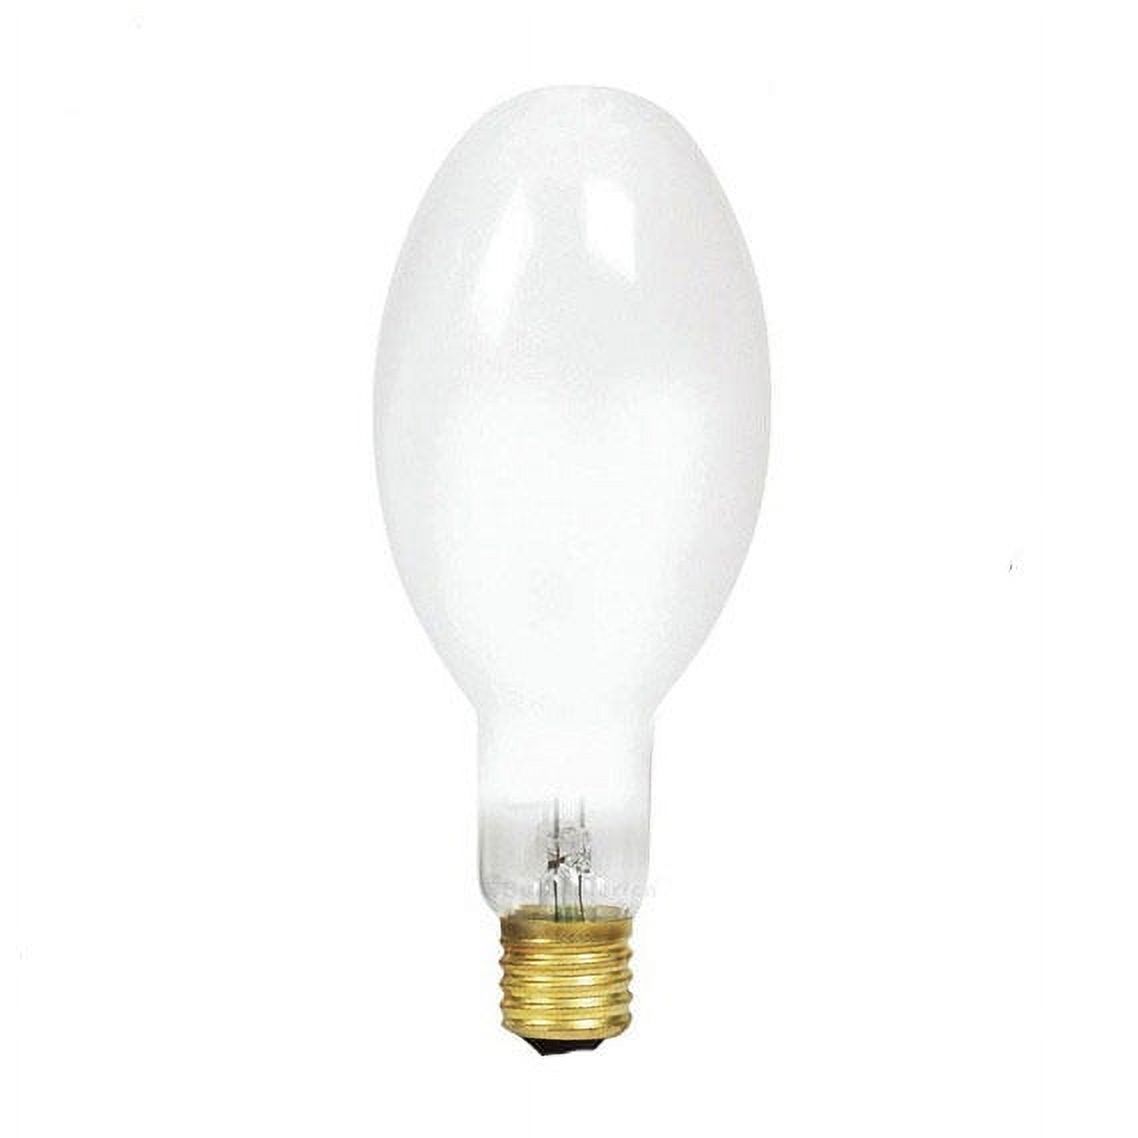 Philips 130682 360w ED37 EX39 3600k White HID Metal Halide Light Bulb - image 1 of 2